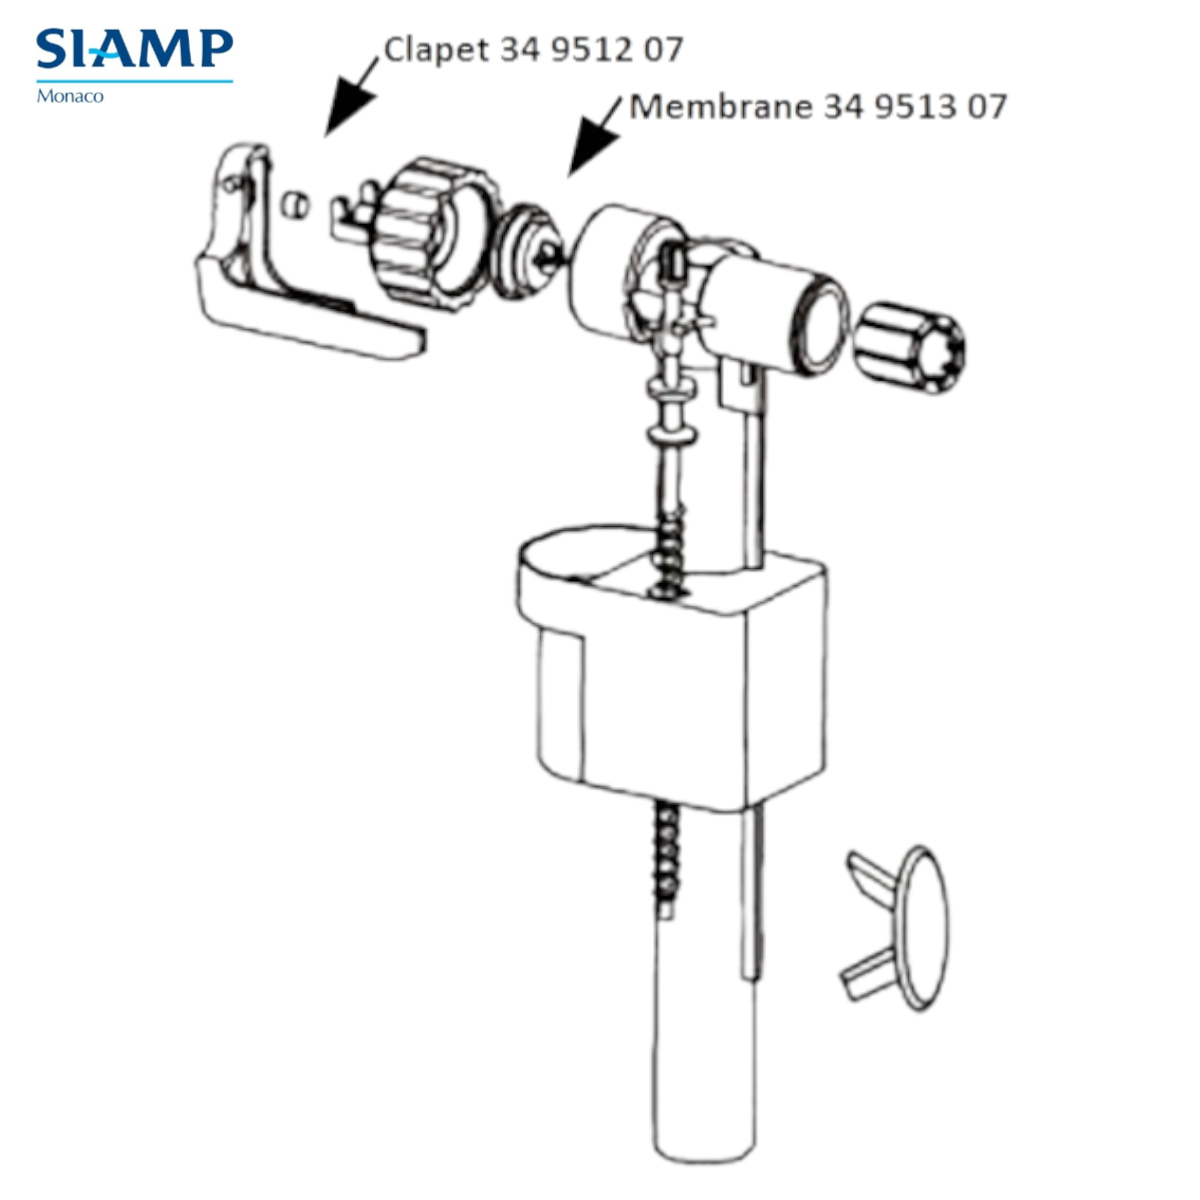 SIAMP 34 9716 20 Membrane + Insert Robinet Flotteur.